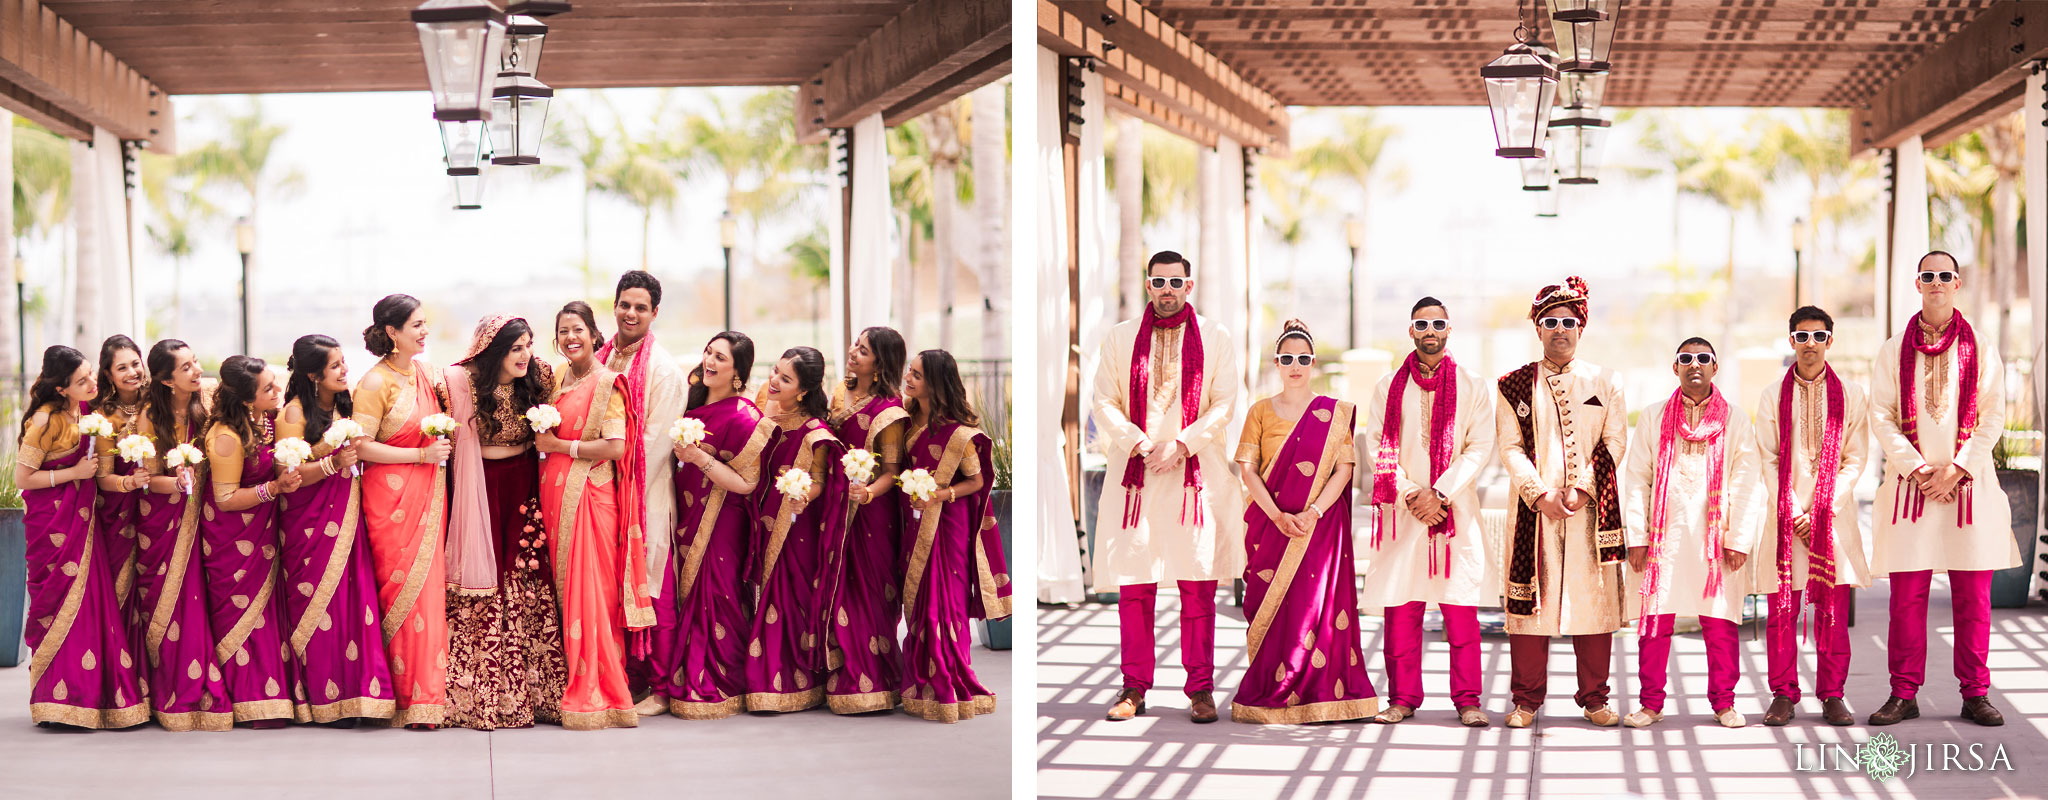 16 sheraton carlsbad resort indian wedding photography